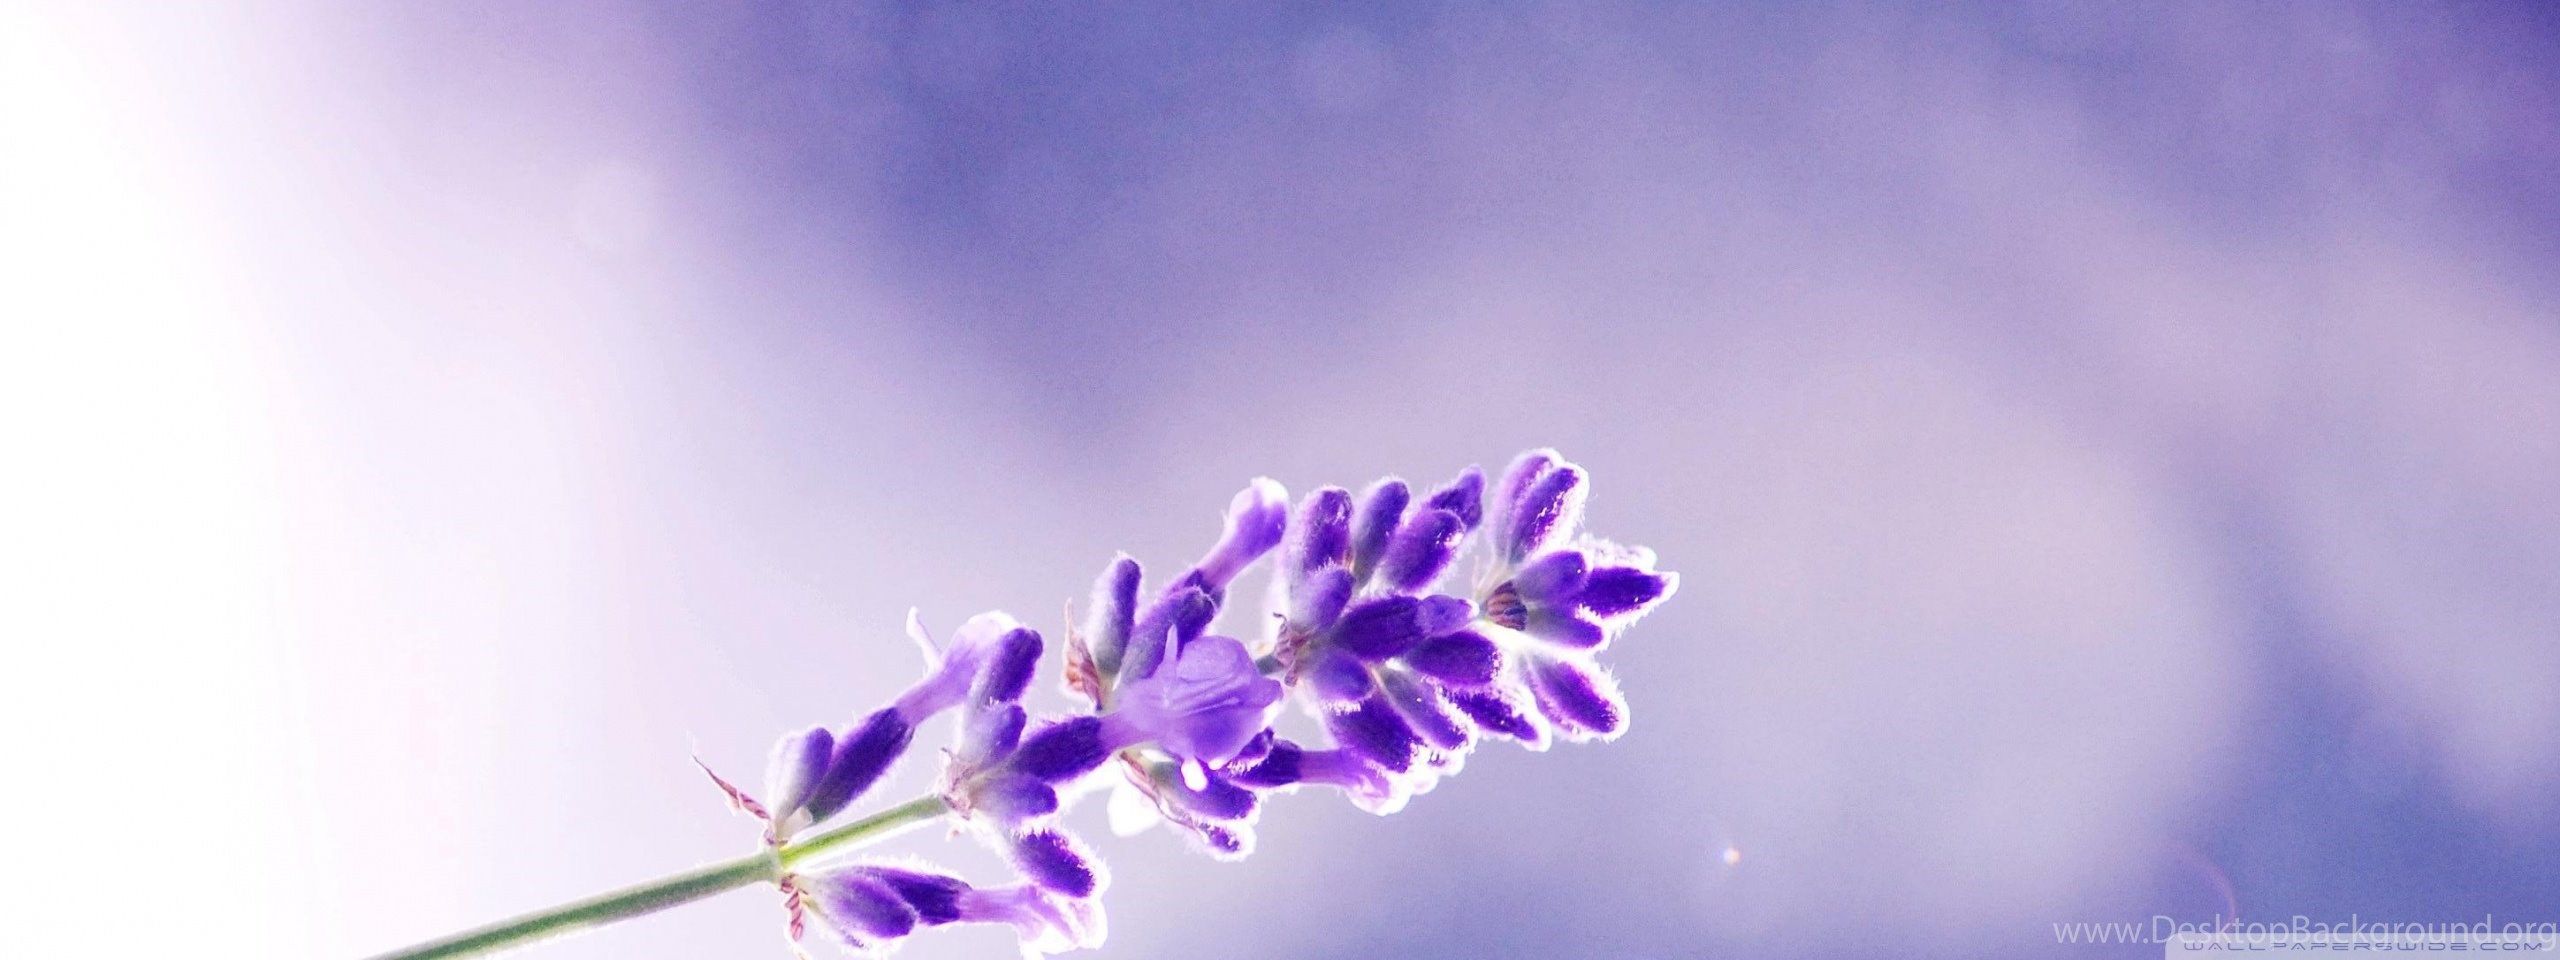 2560x960 Lavender Flowers Wallpaper Desktop Background